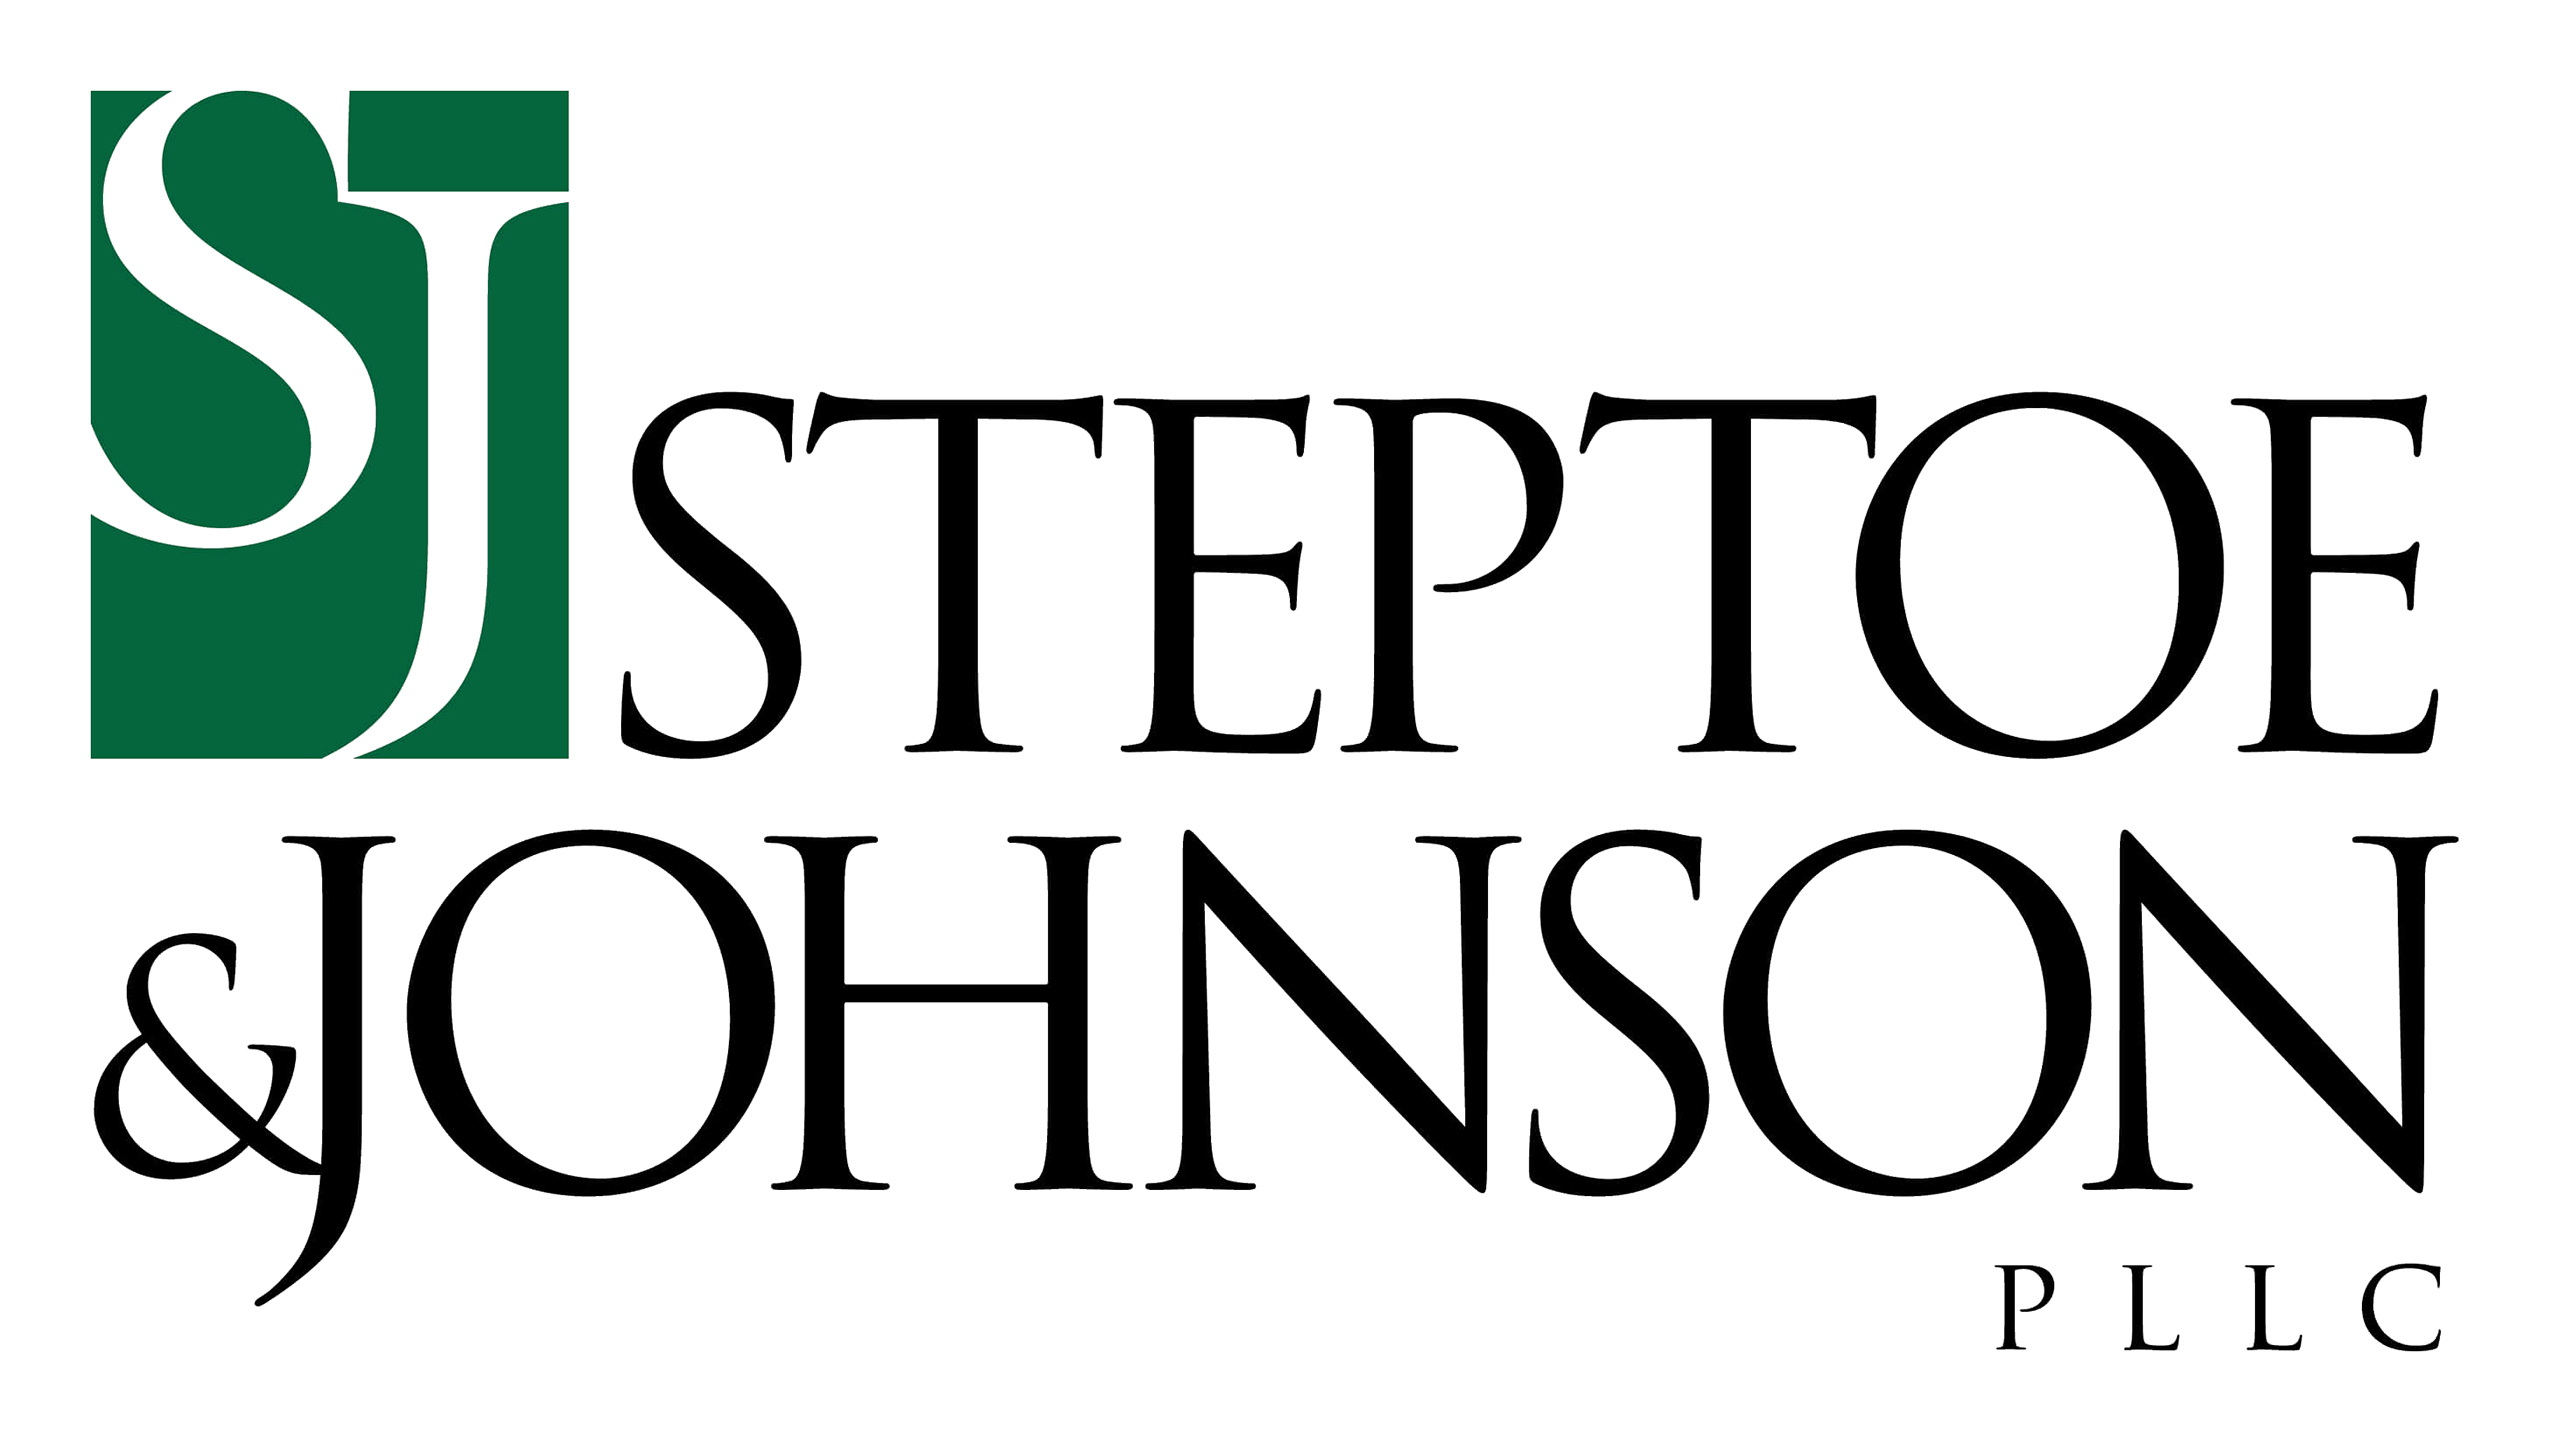 Steptoe and Johnson